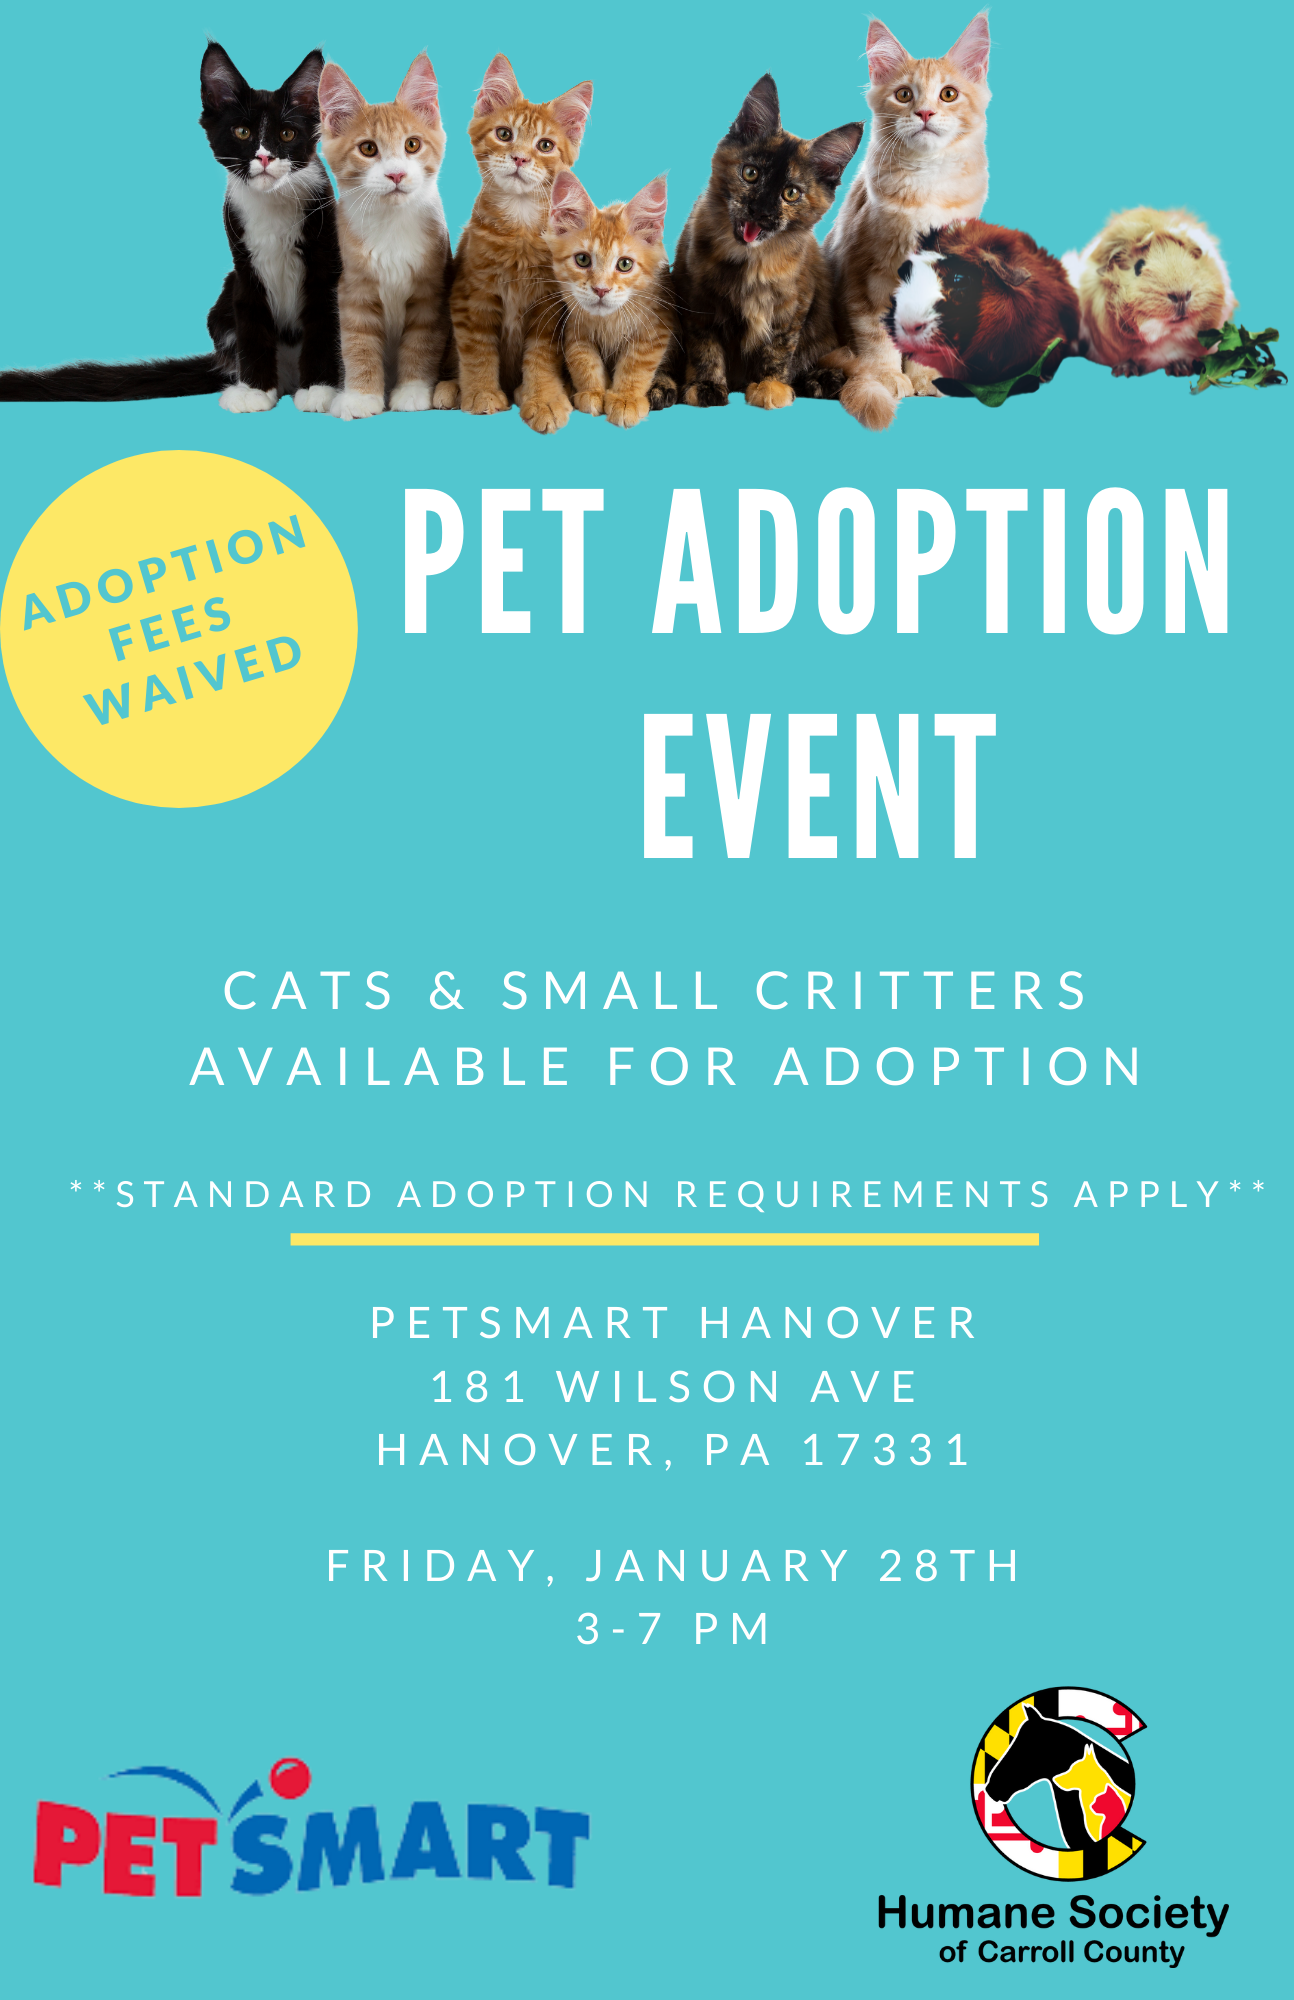 Adoption EventPetSmart Hanover, PA Humane Society of Carroll County